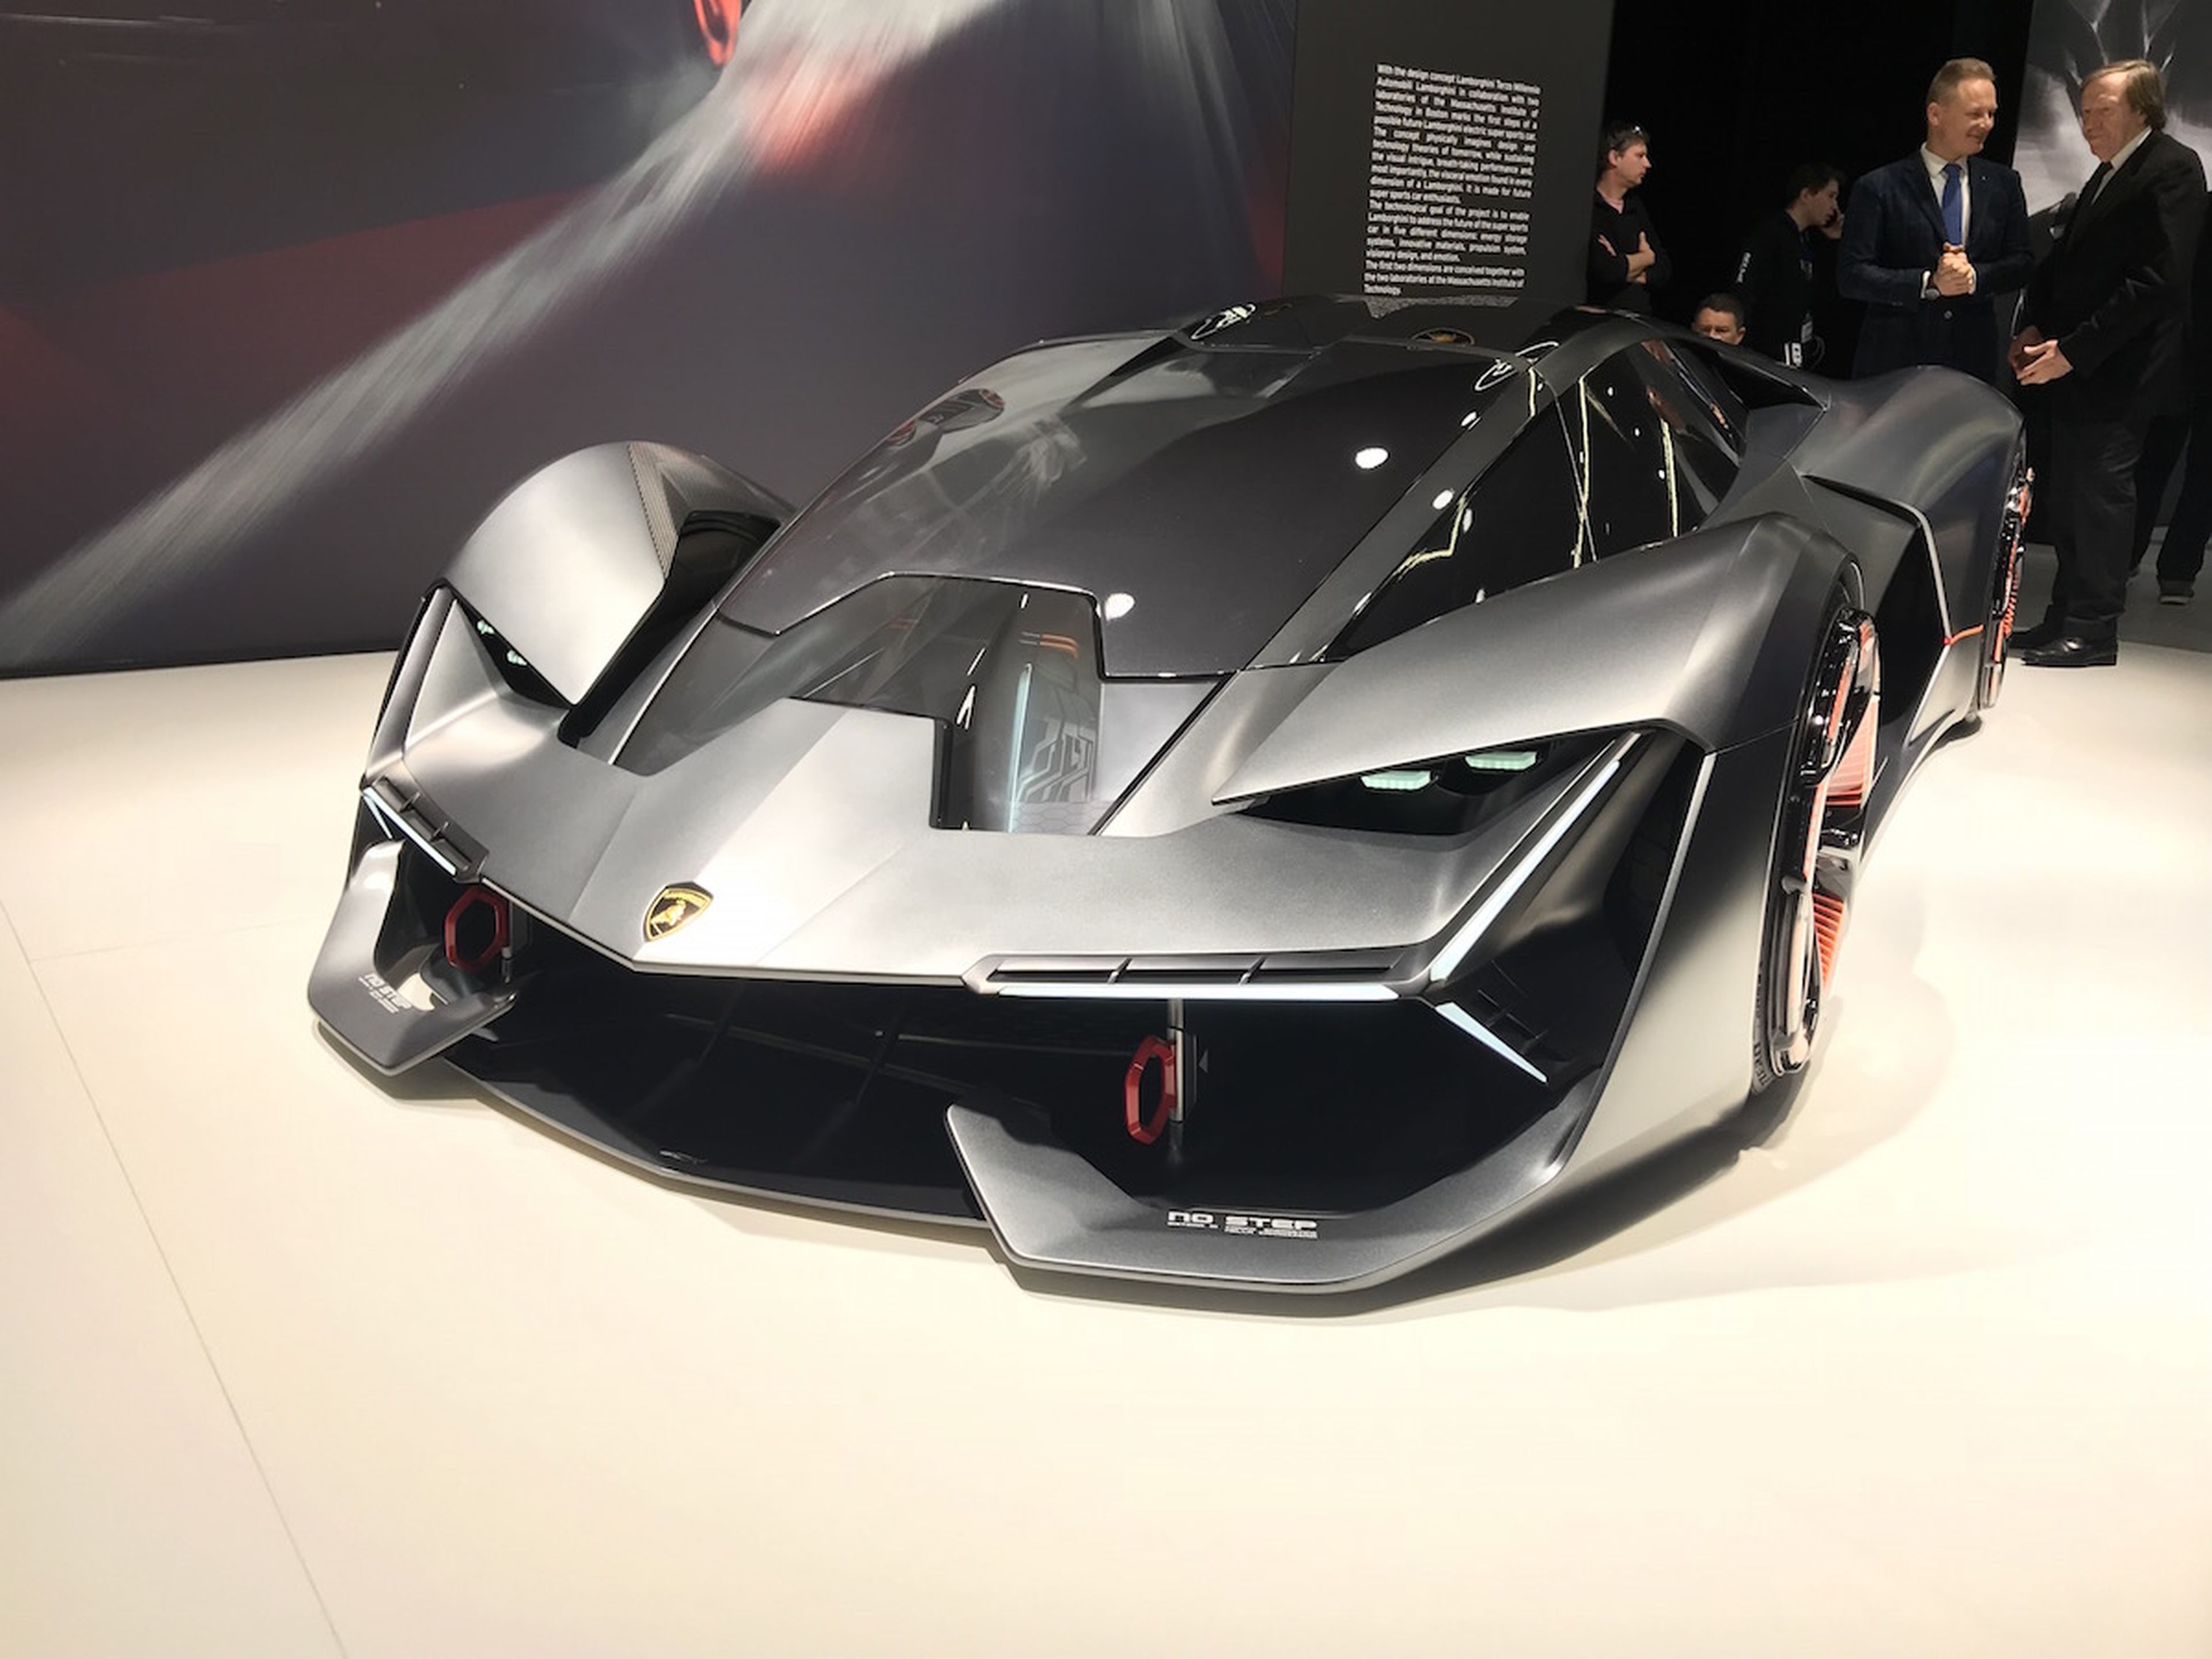 Lamborghini ha presentado este prototipo futurista, aunque no tanto en su caso.